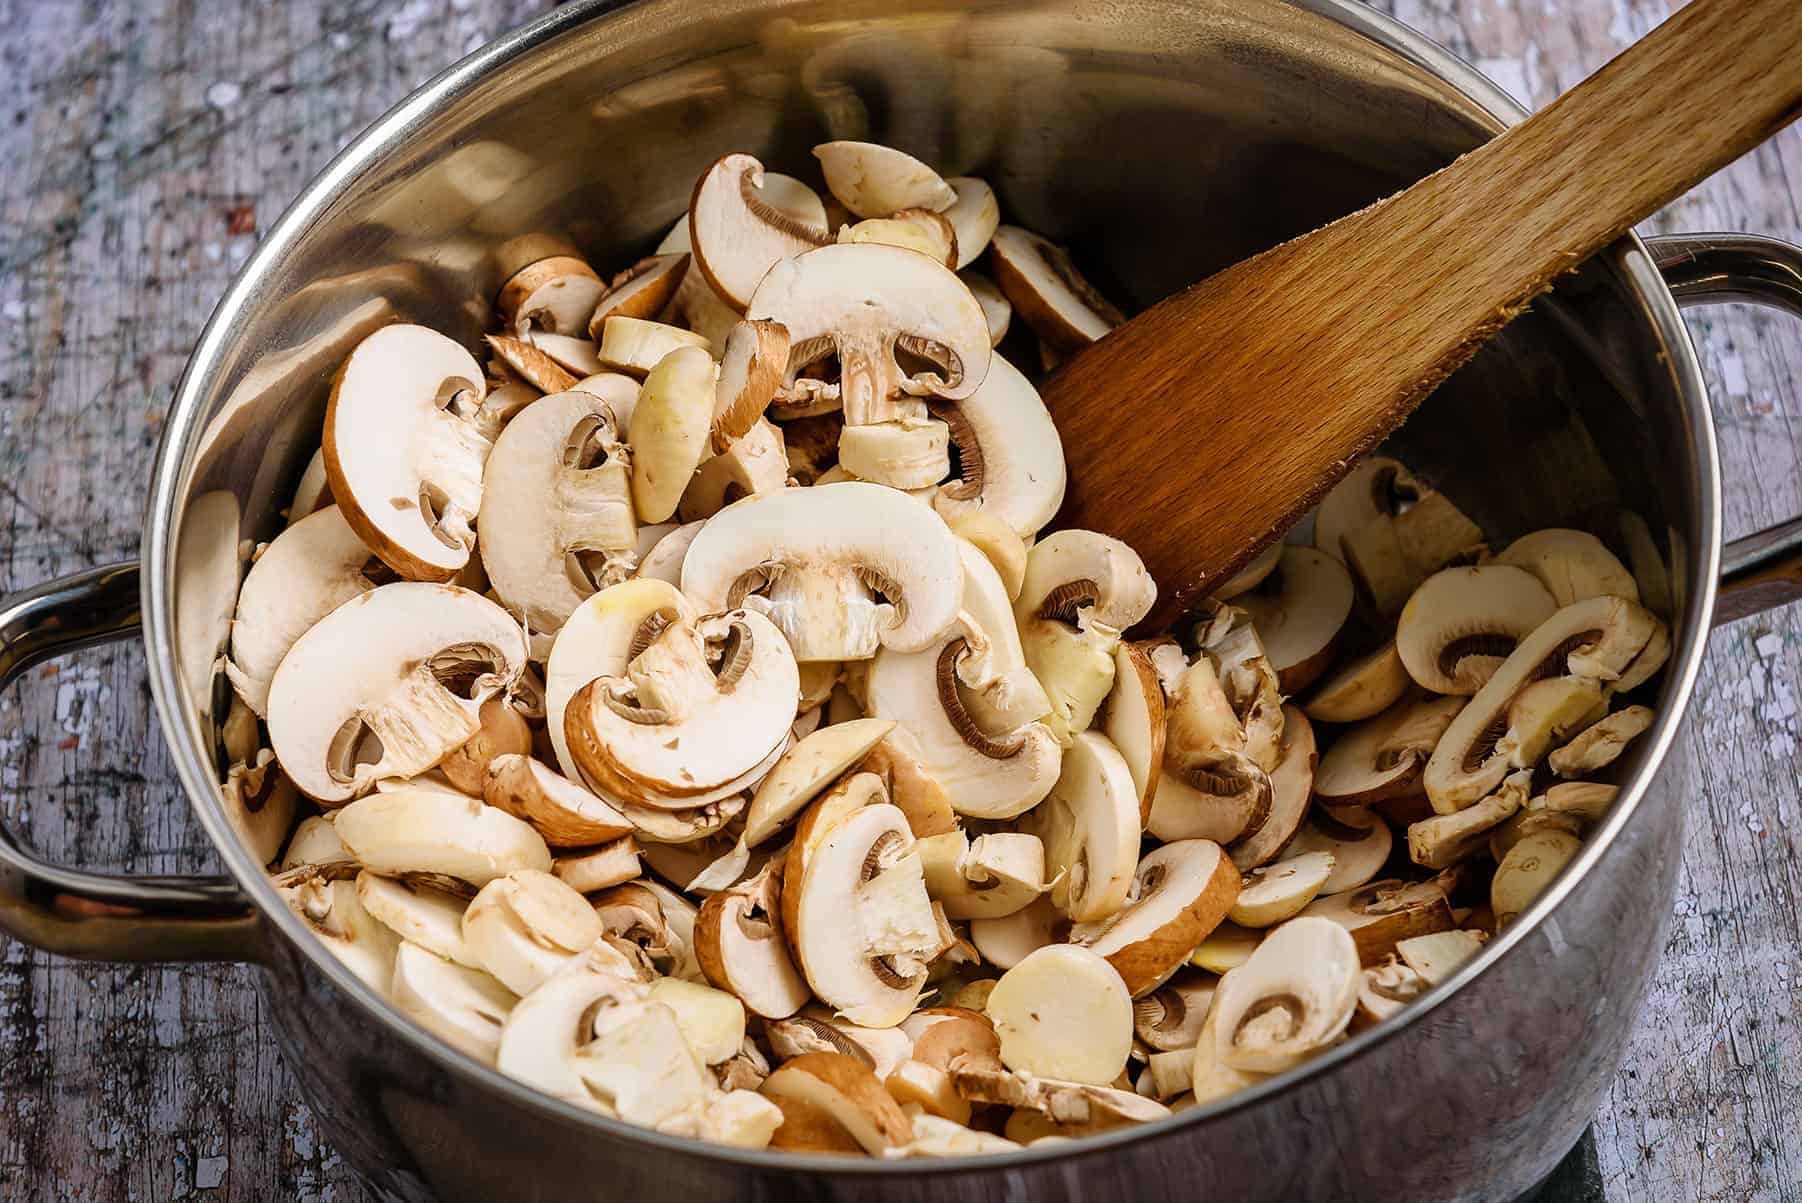 Adding the mushrooms to pan